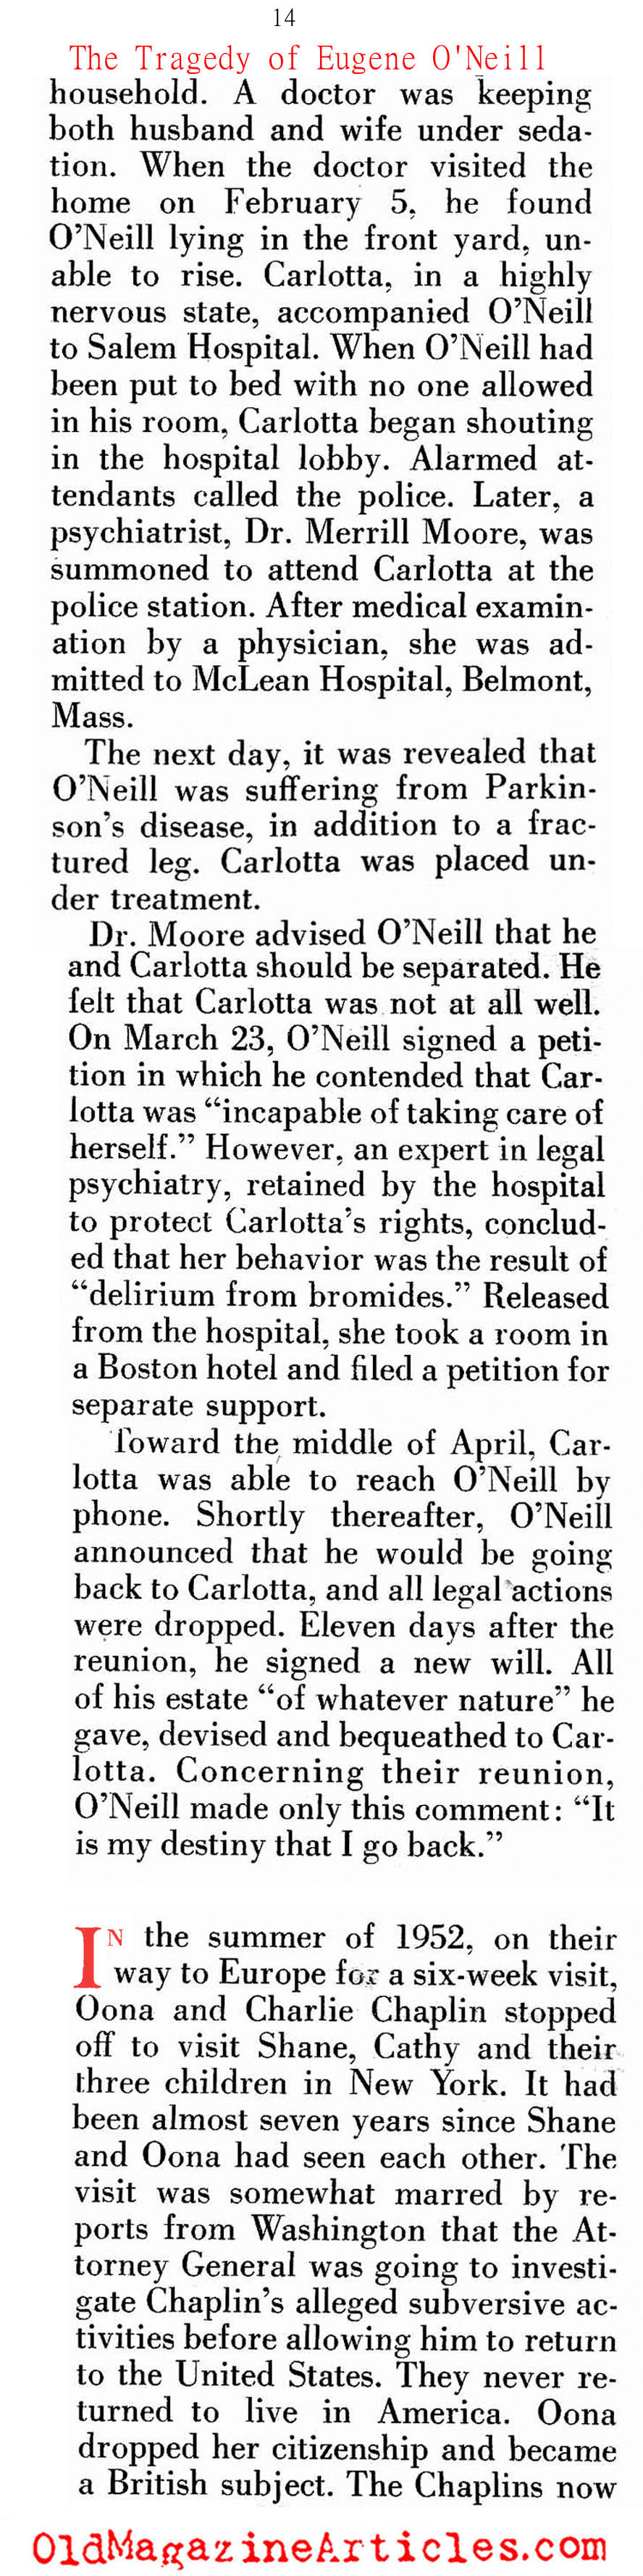 The Tragedy of Eugene O'Neill (Look Magazine, 1959)